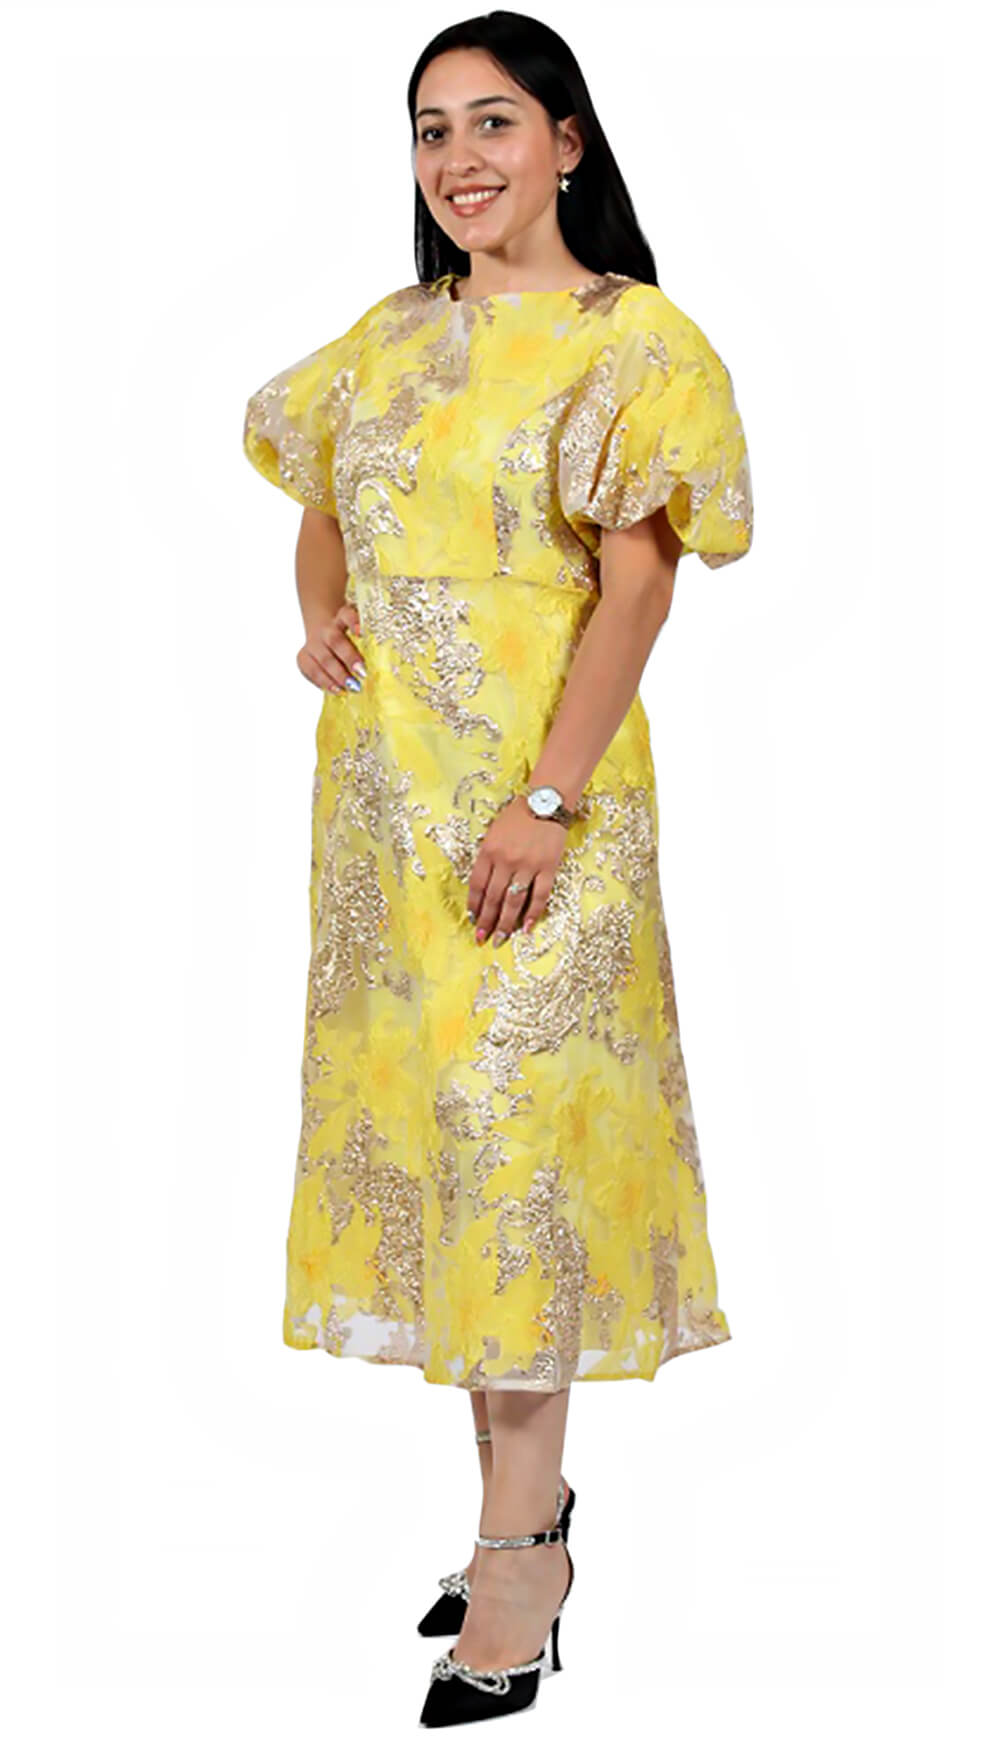 Diana 1 Piece Metallic Brocade Dress 8691-YEL Size 8-24